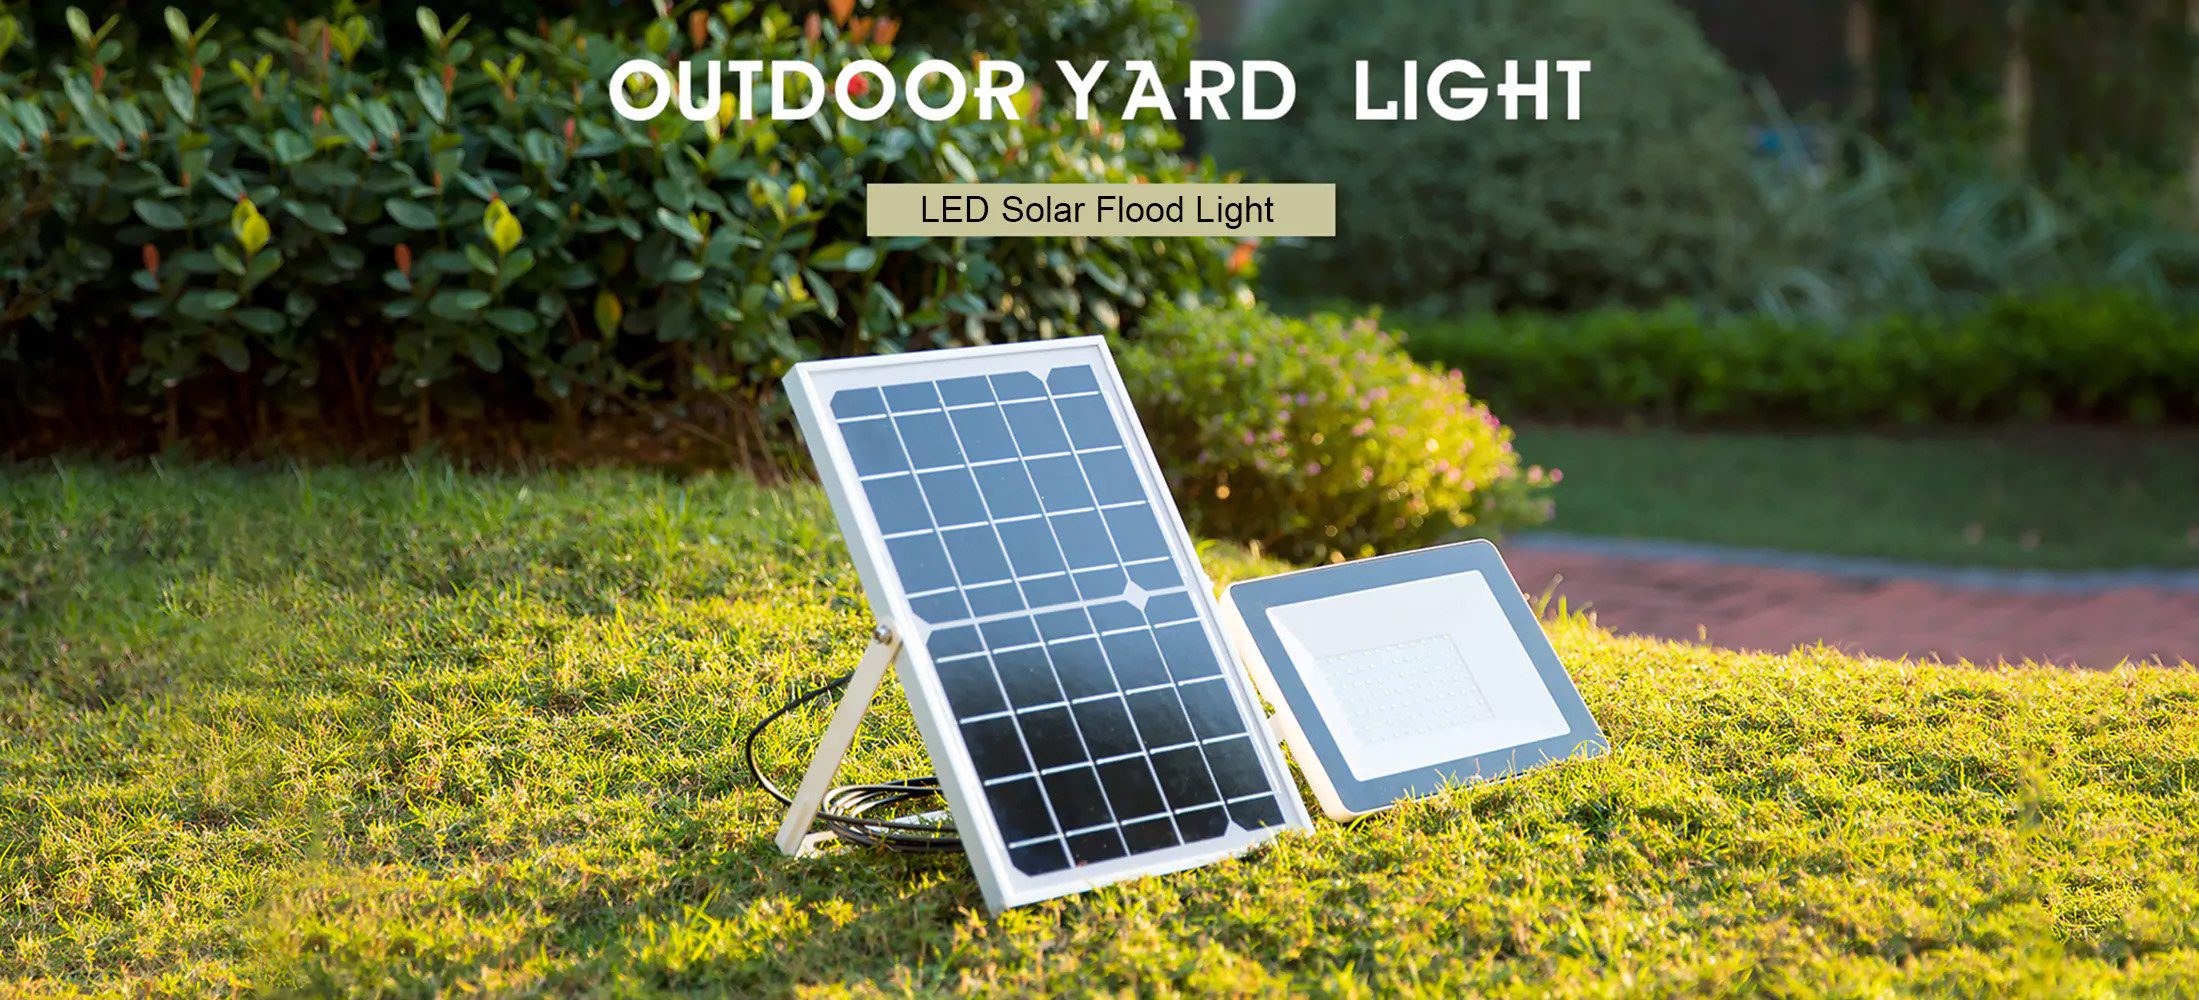 solar-Flood-light-for-outdoor-yart